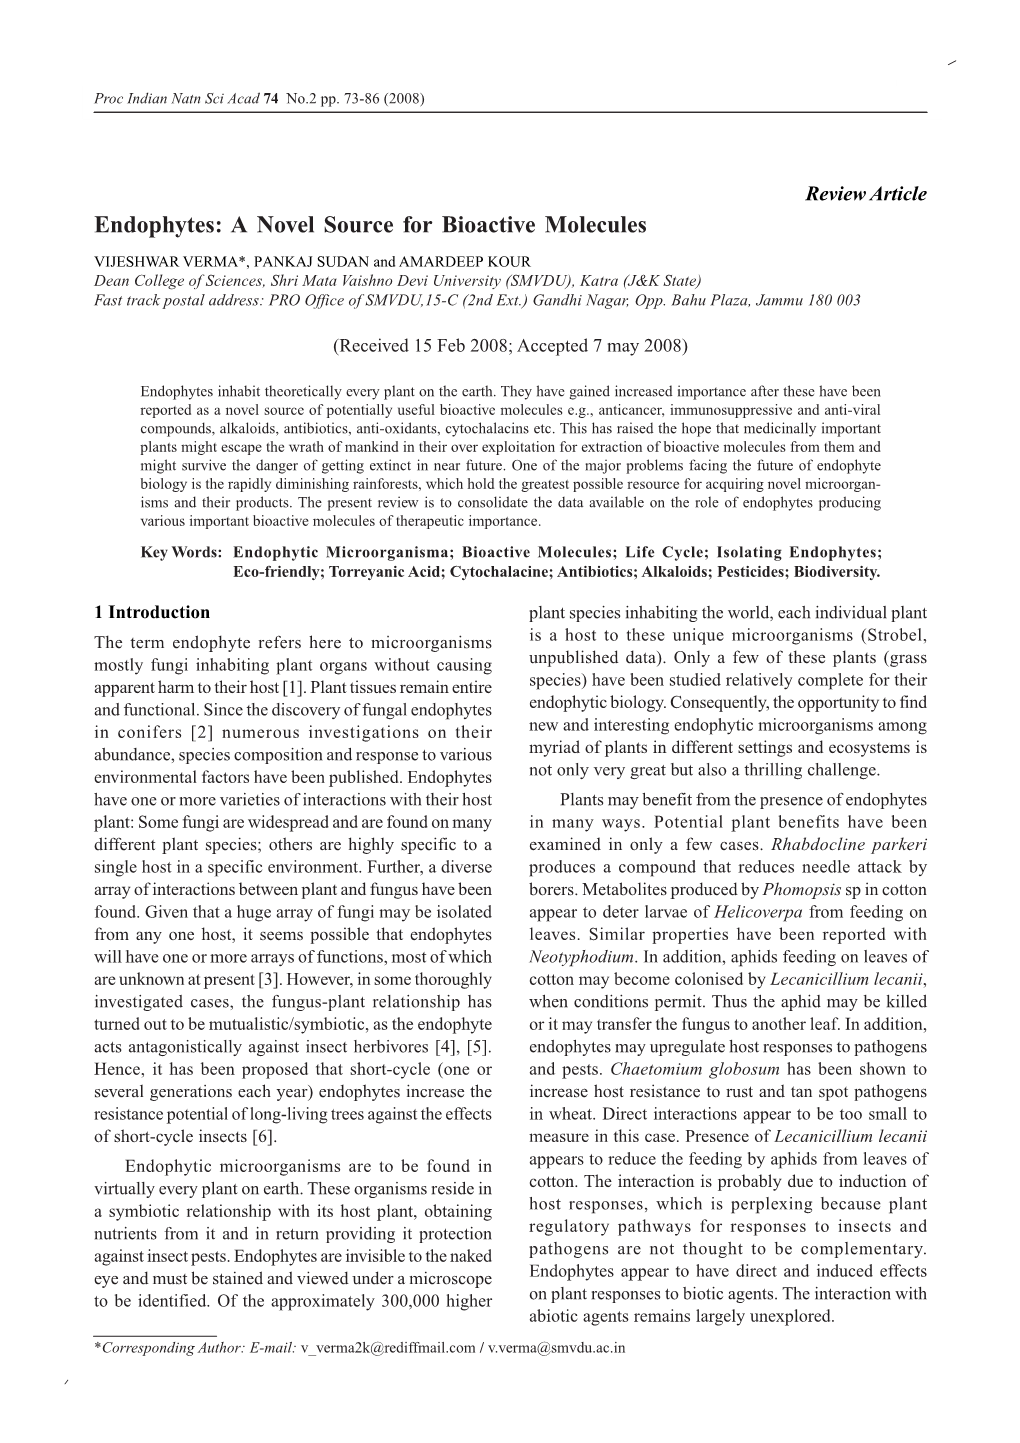 Endophytes: a Novel Source for Bioactive Molecules